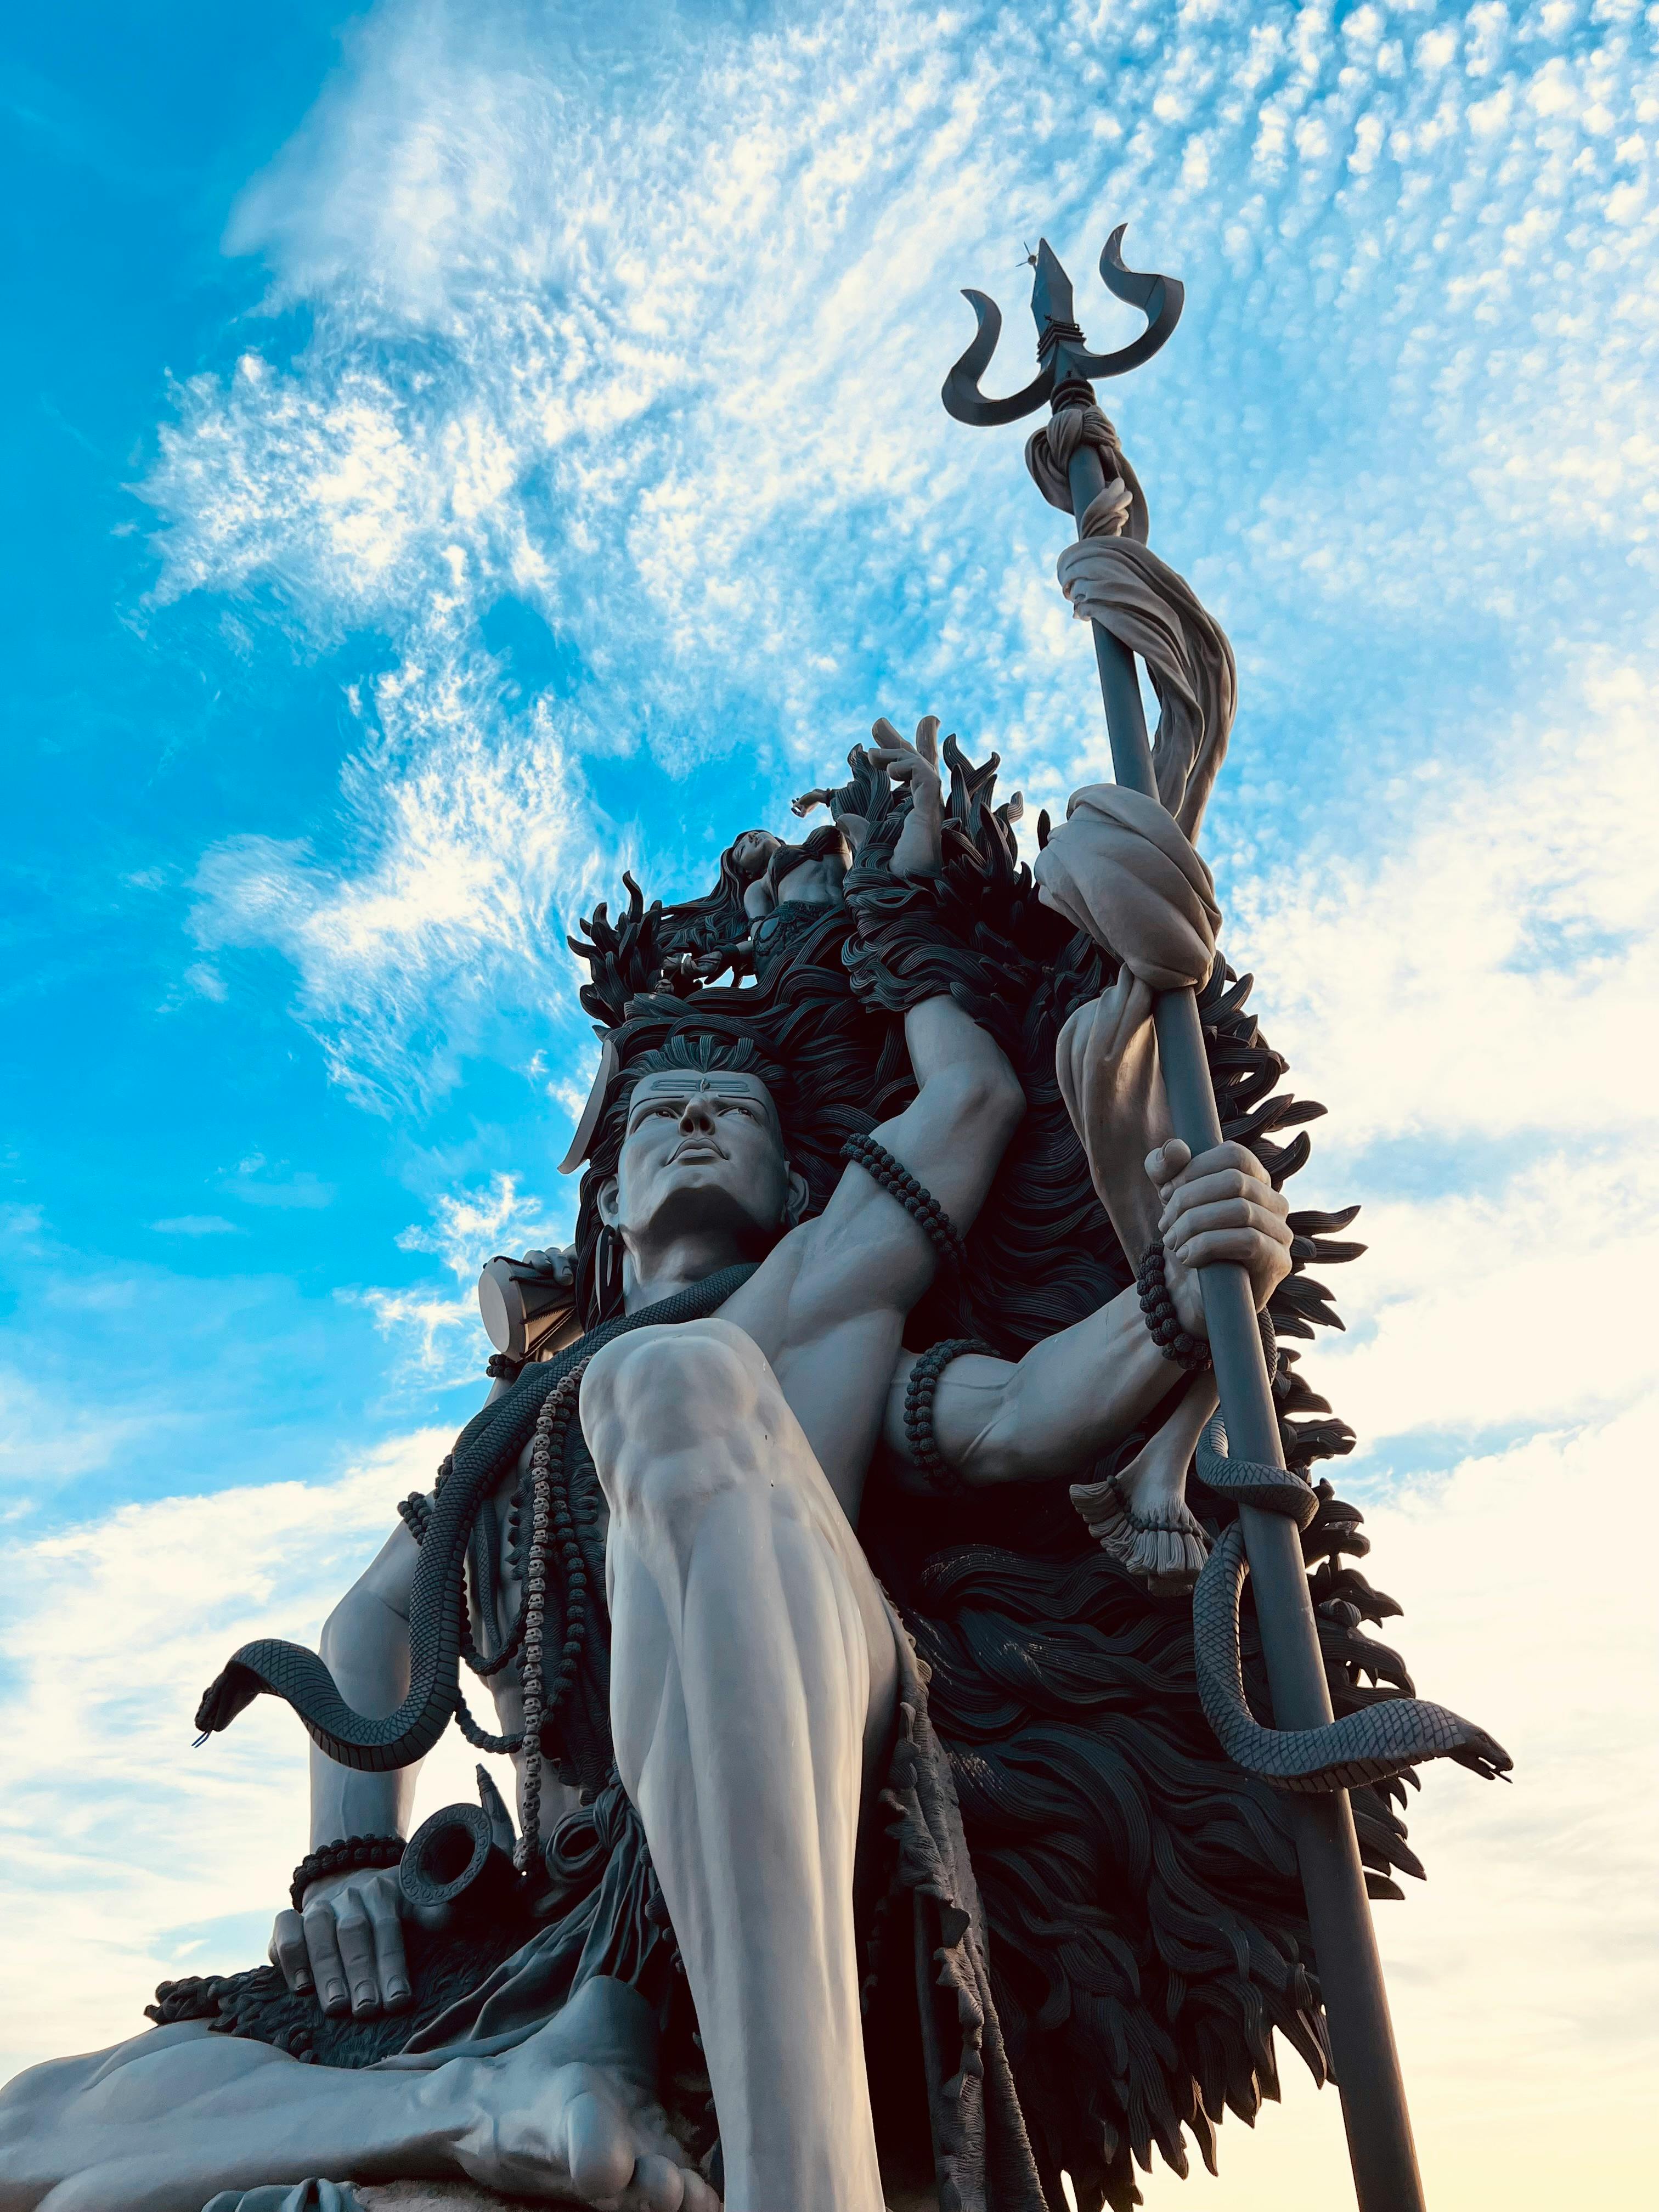 900 Shiva ideas in 2023  shiva shiva art lord shiva